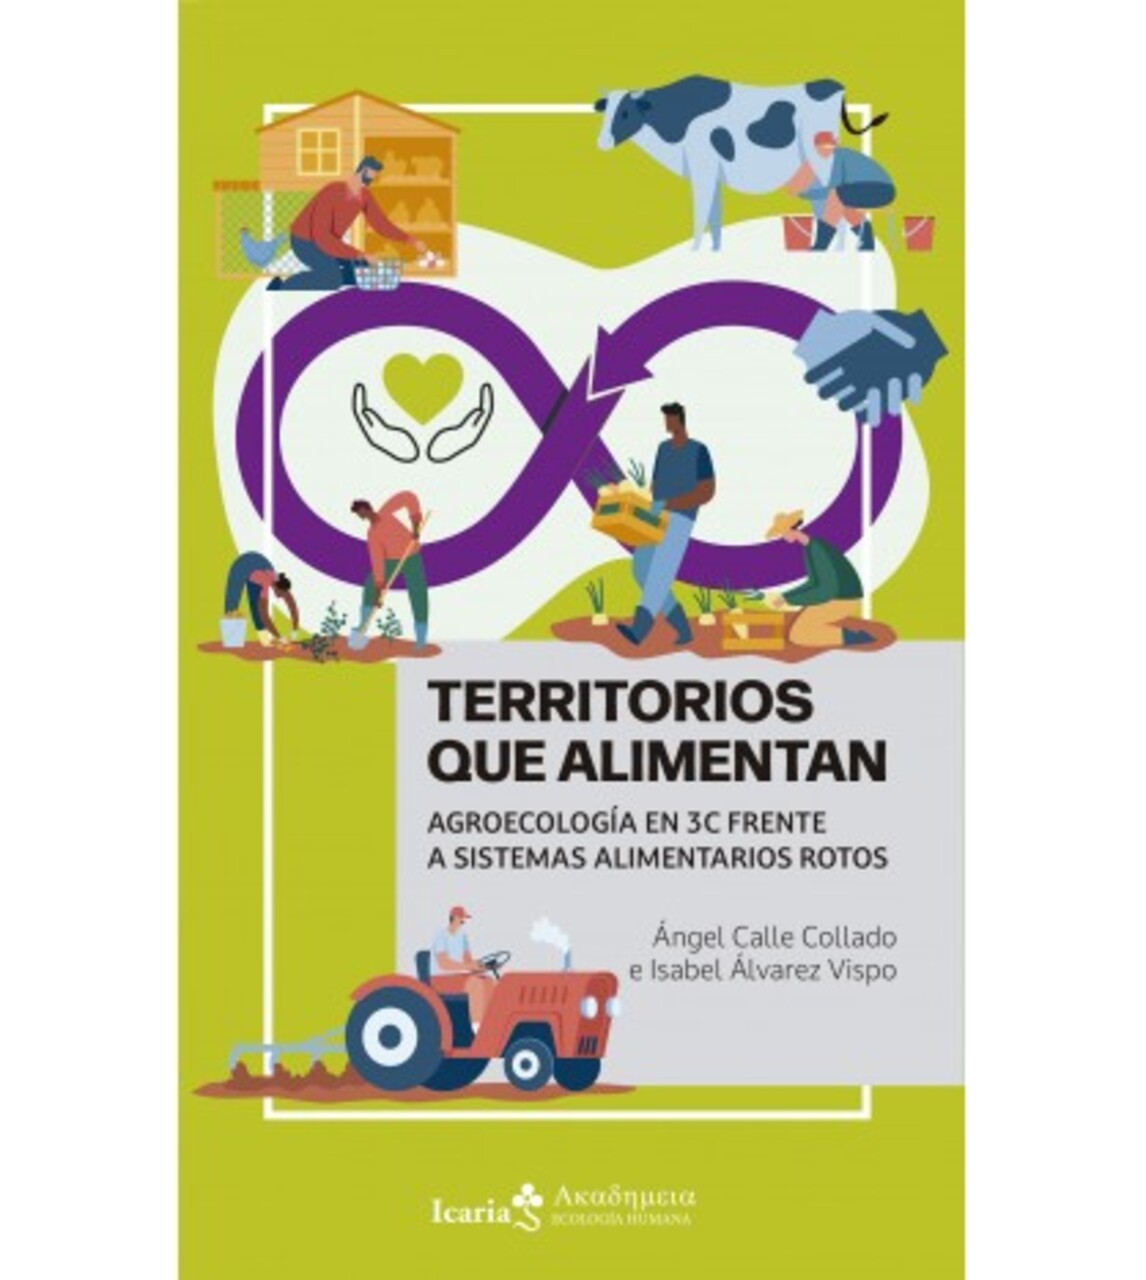 "Territorios que alimentan Agroecología en 3C frente a sistemas alimentarios rotos", presentación